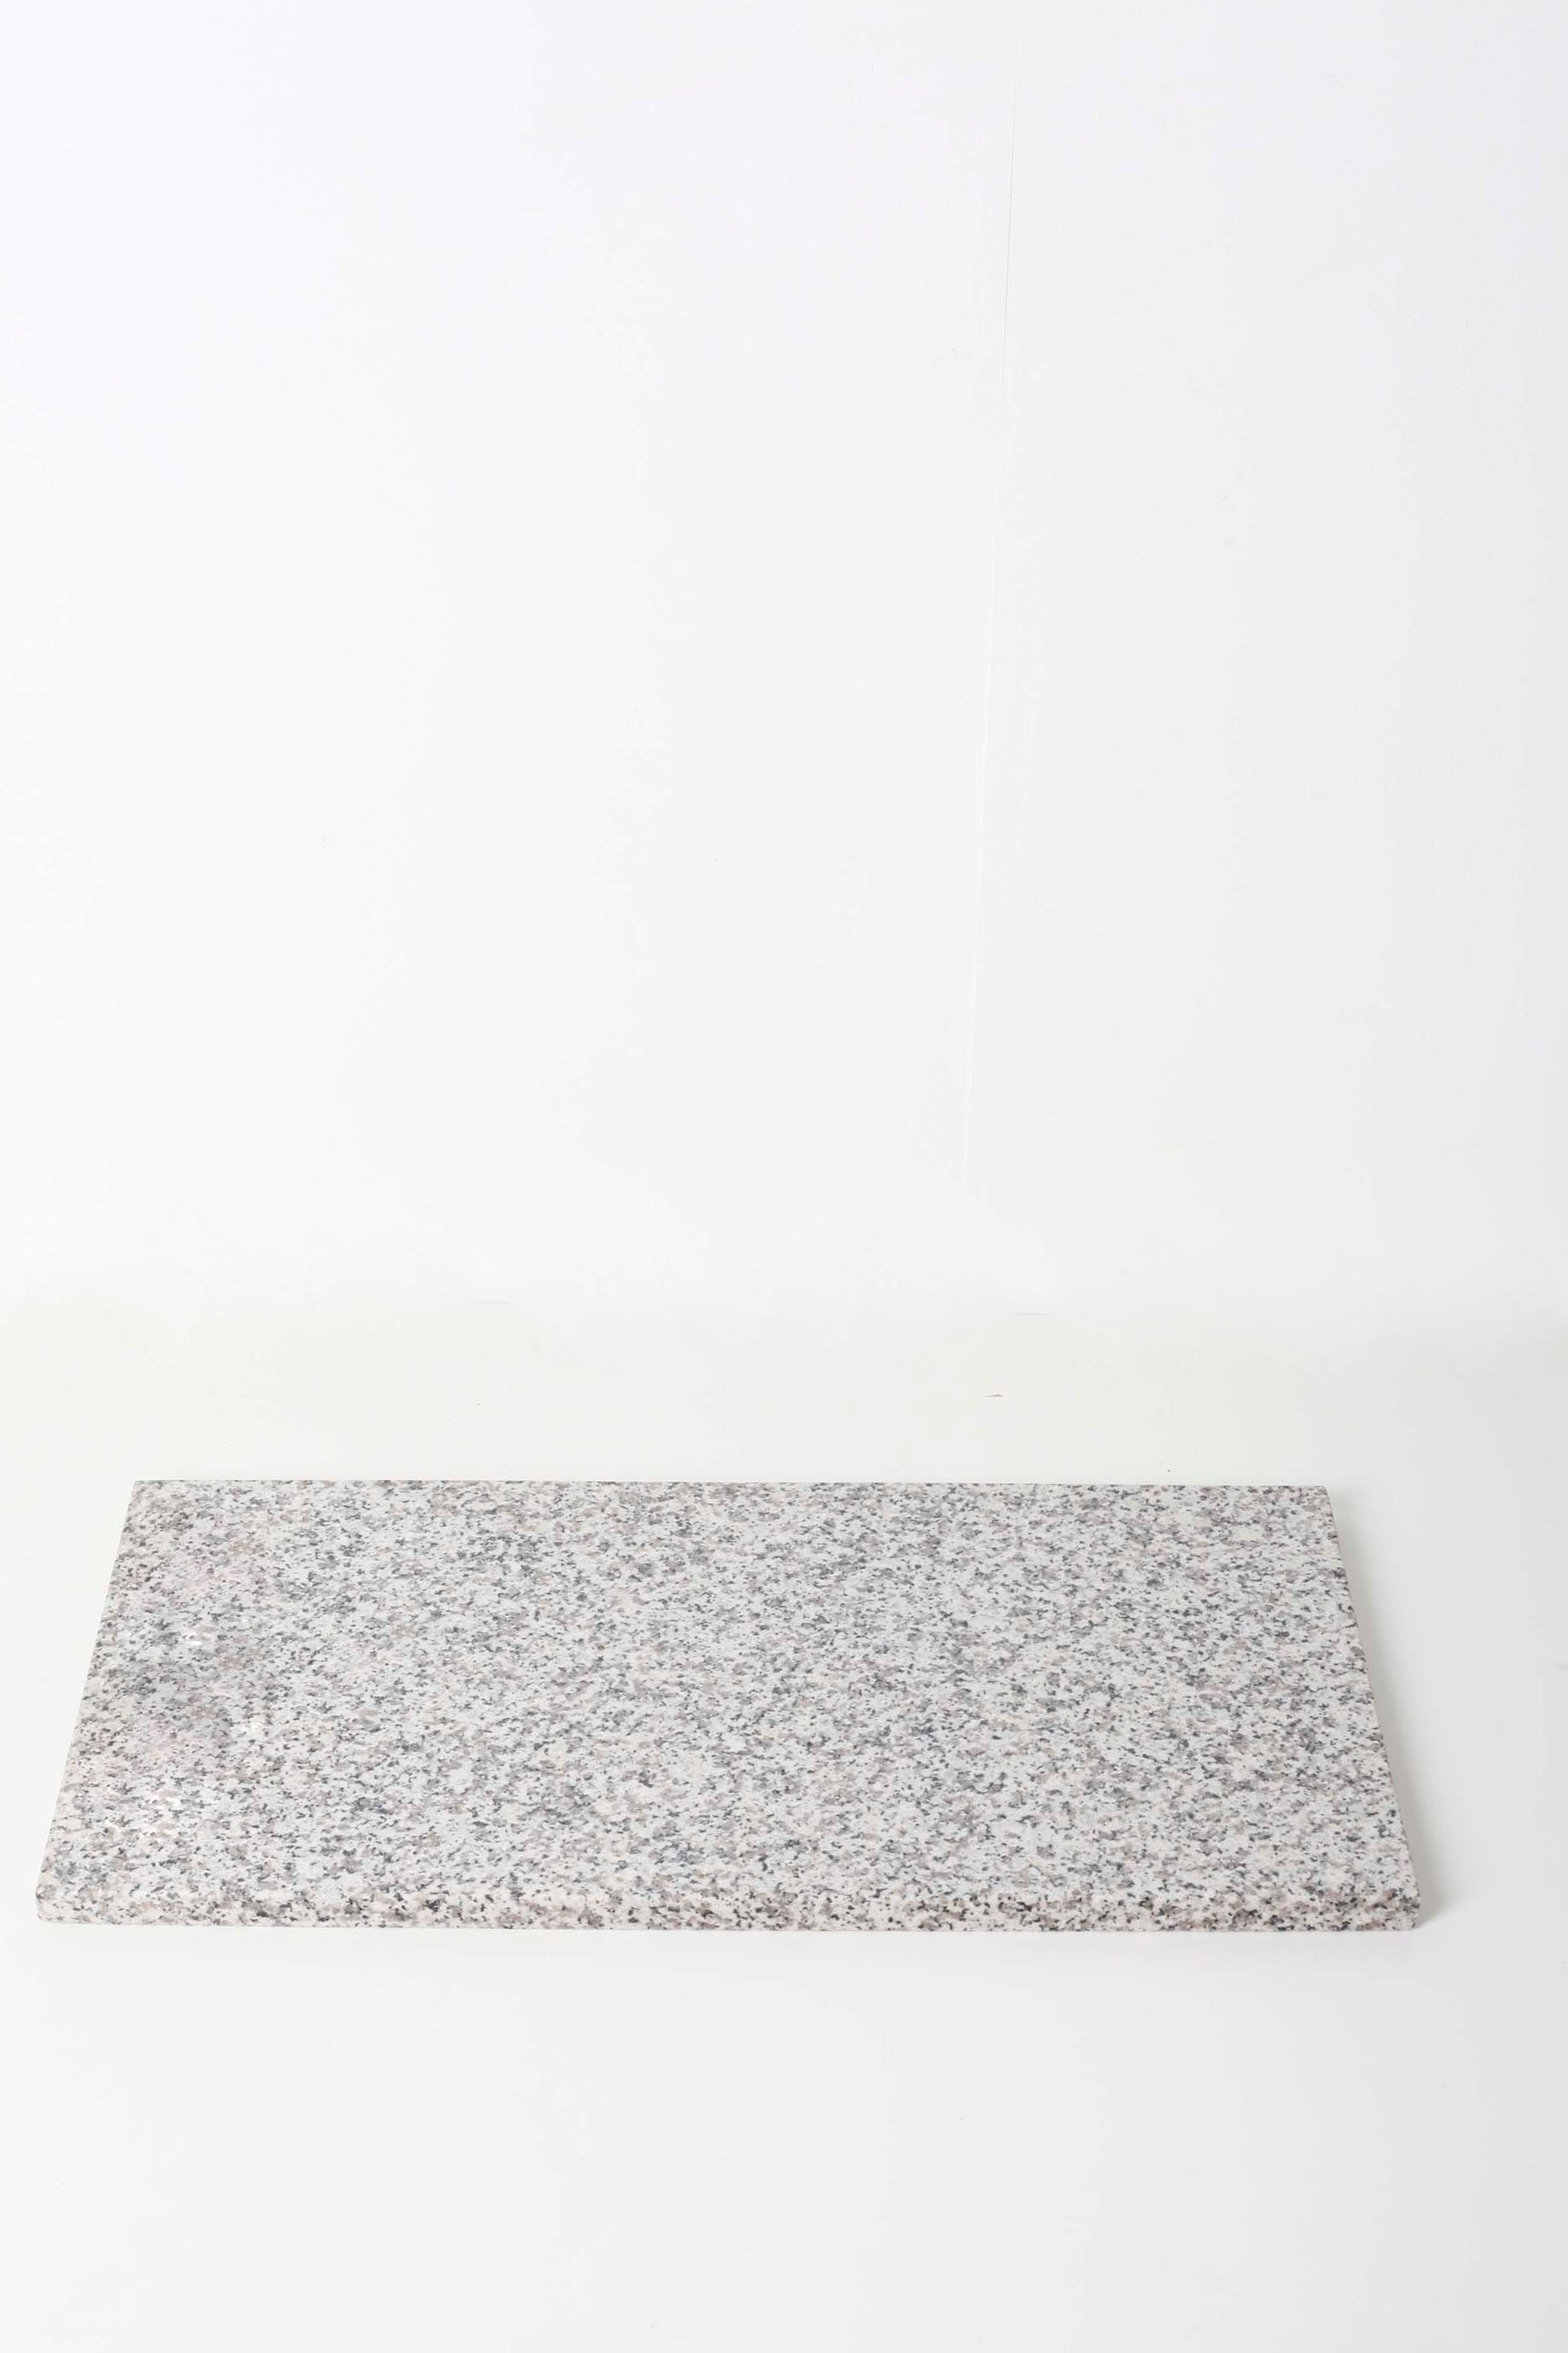 Rectangular Granite Tile